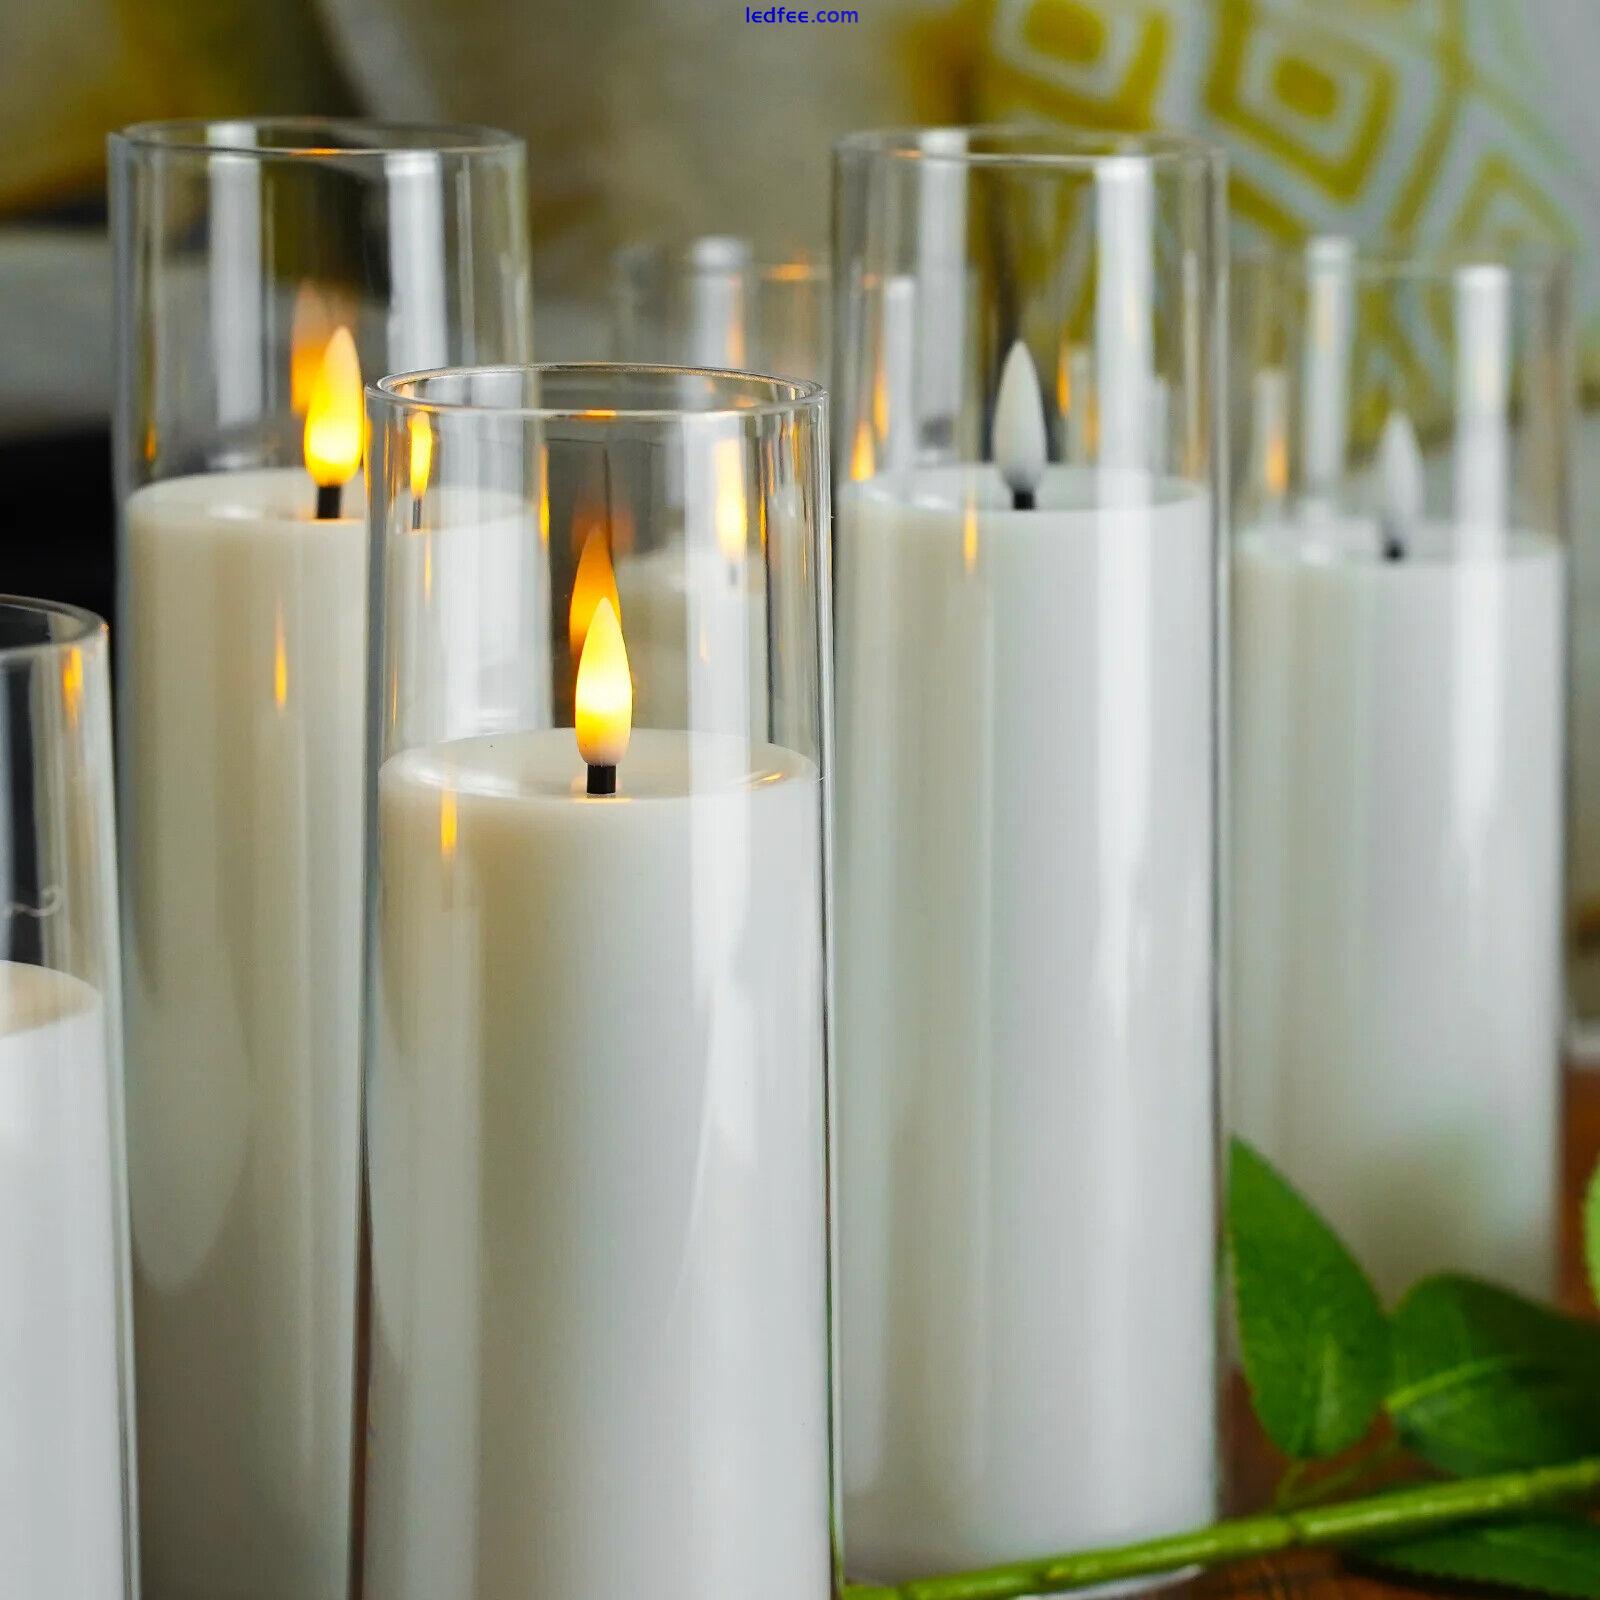   9pcs LED flameless candle lights simulate romantic wedding candles 0 